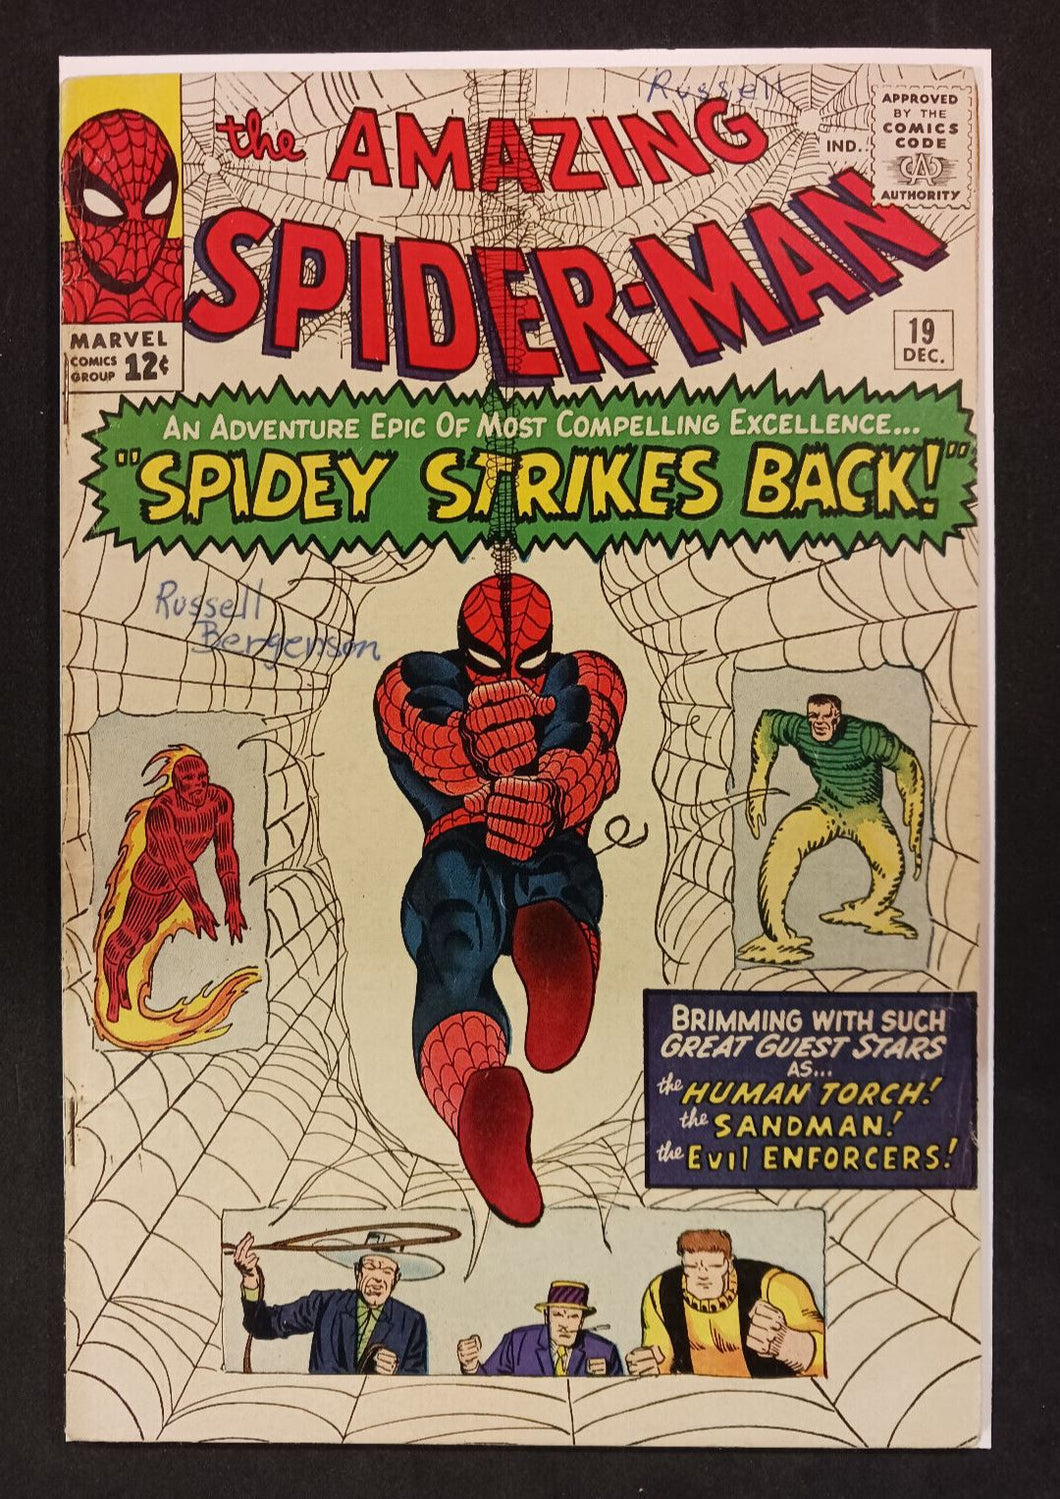 1964 The Amazing Spider-Man #19